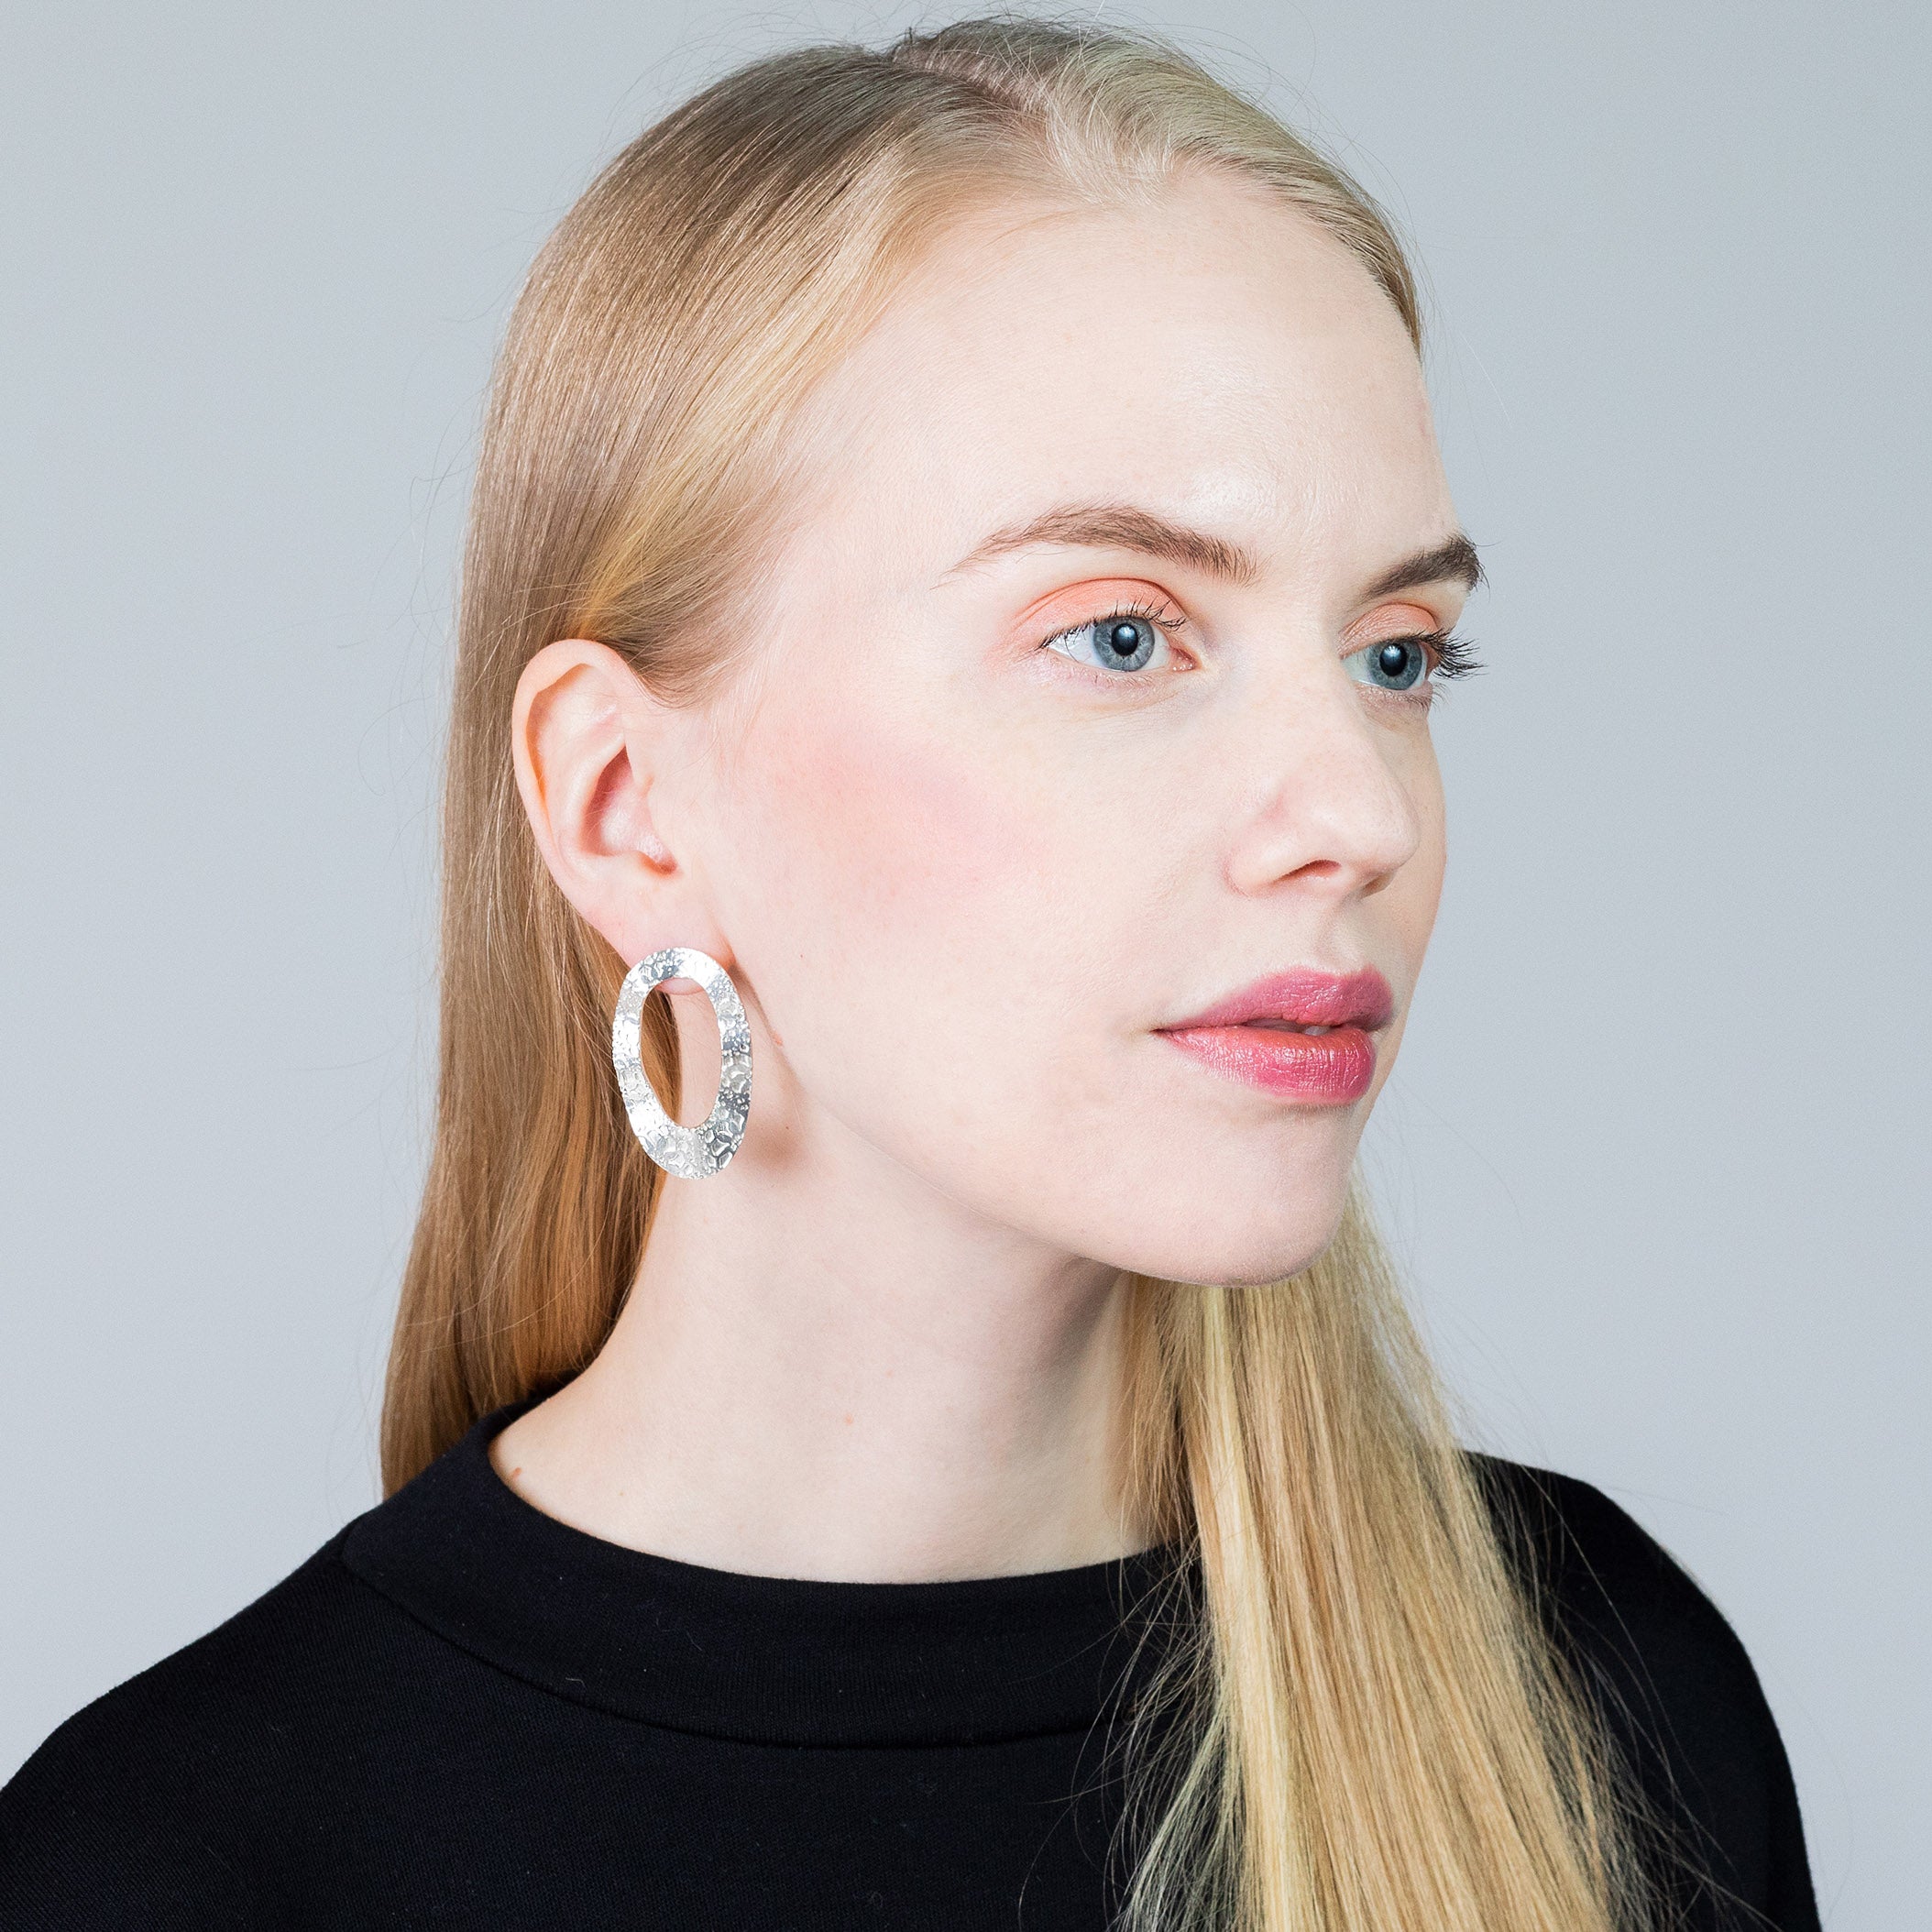 Lace earrings, large